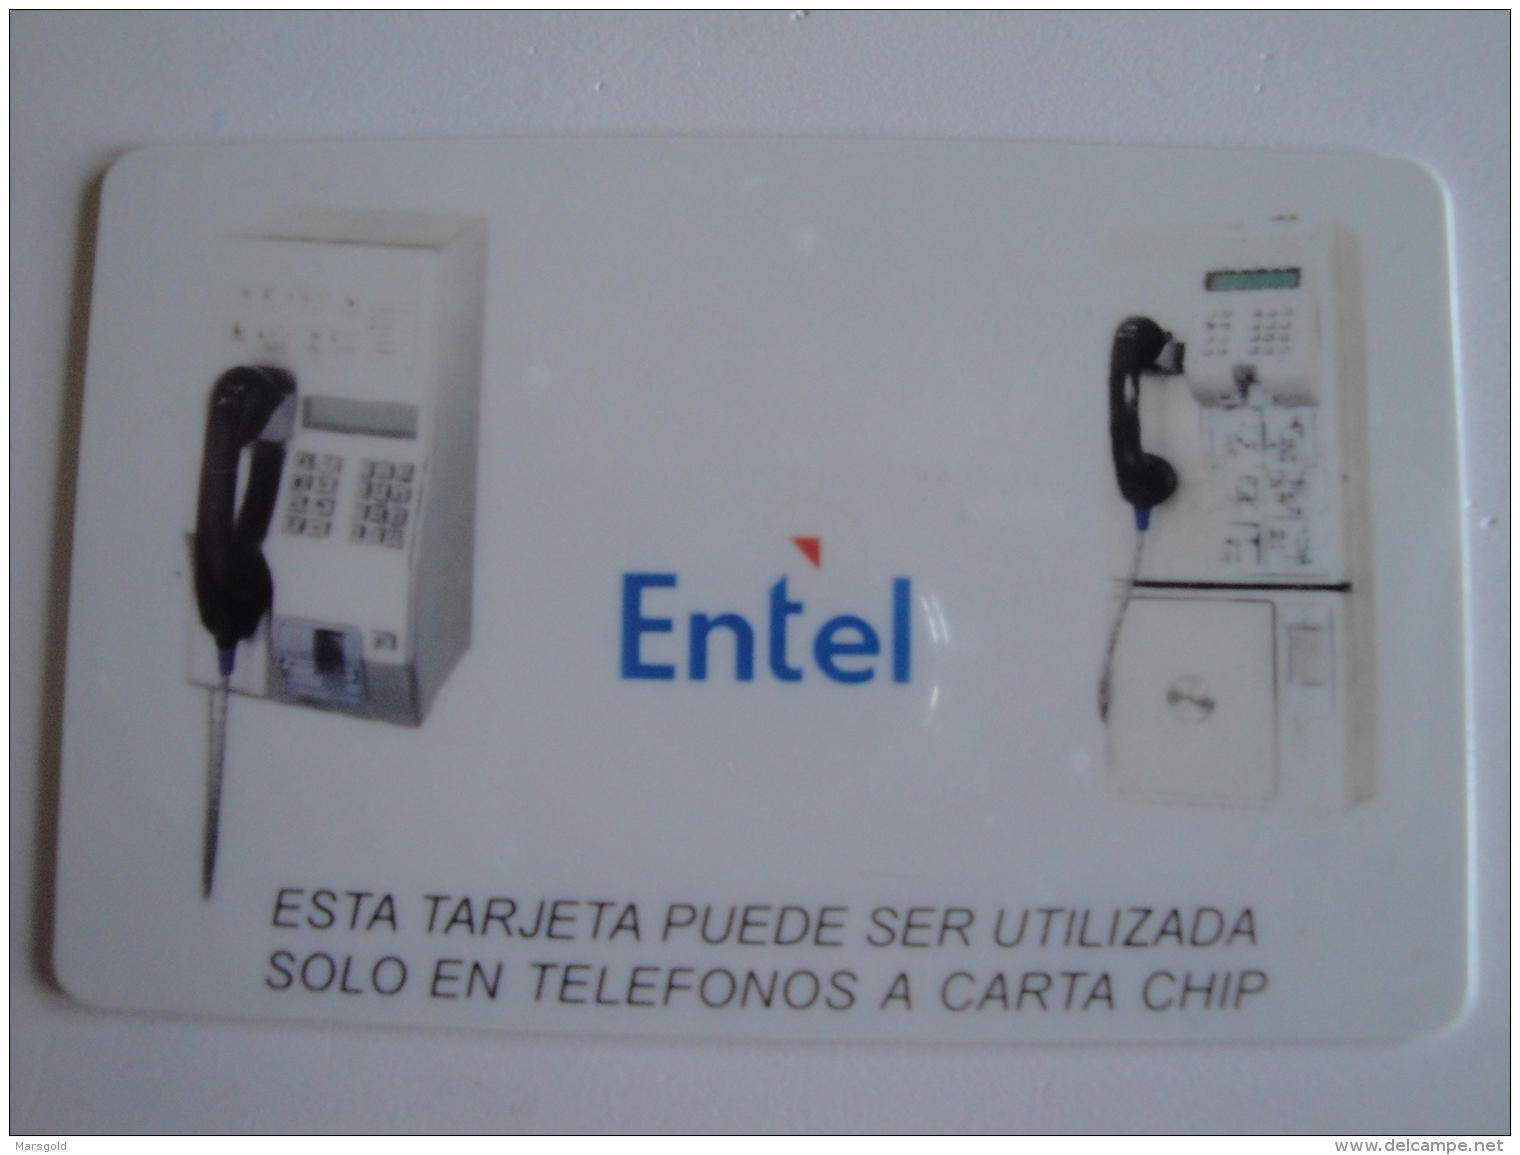 1 Chip Phonecard From Bolivia - Entel - BS.10 - La Nueva Tecnologia - Bolivia